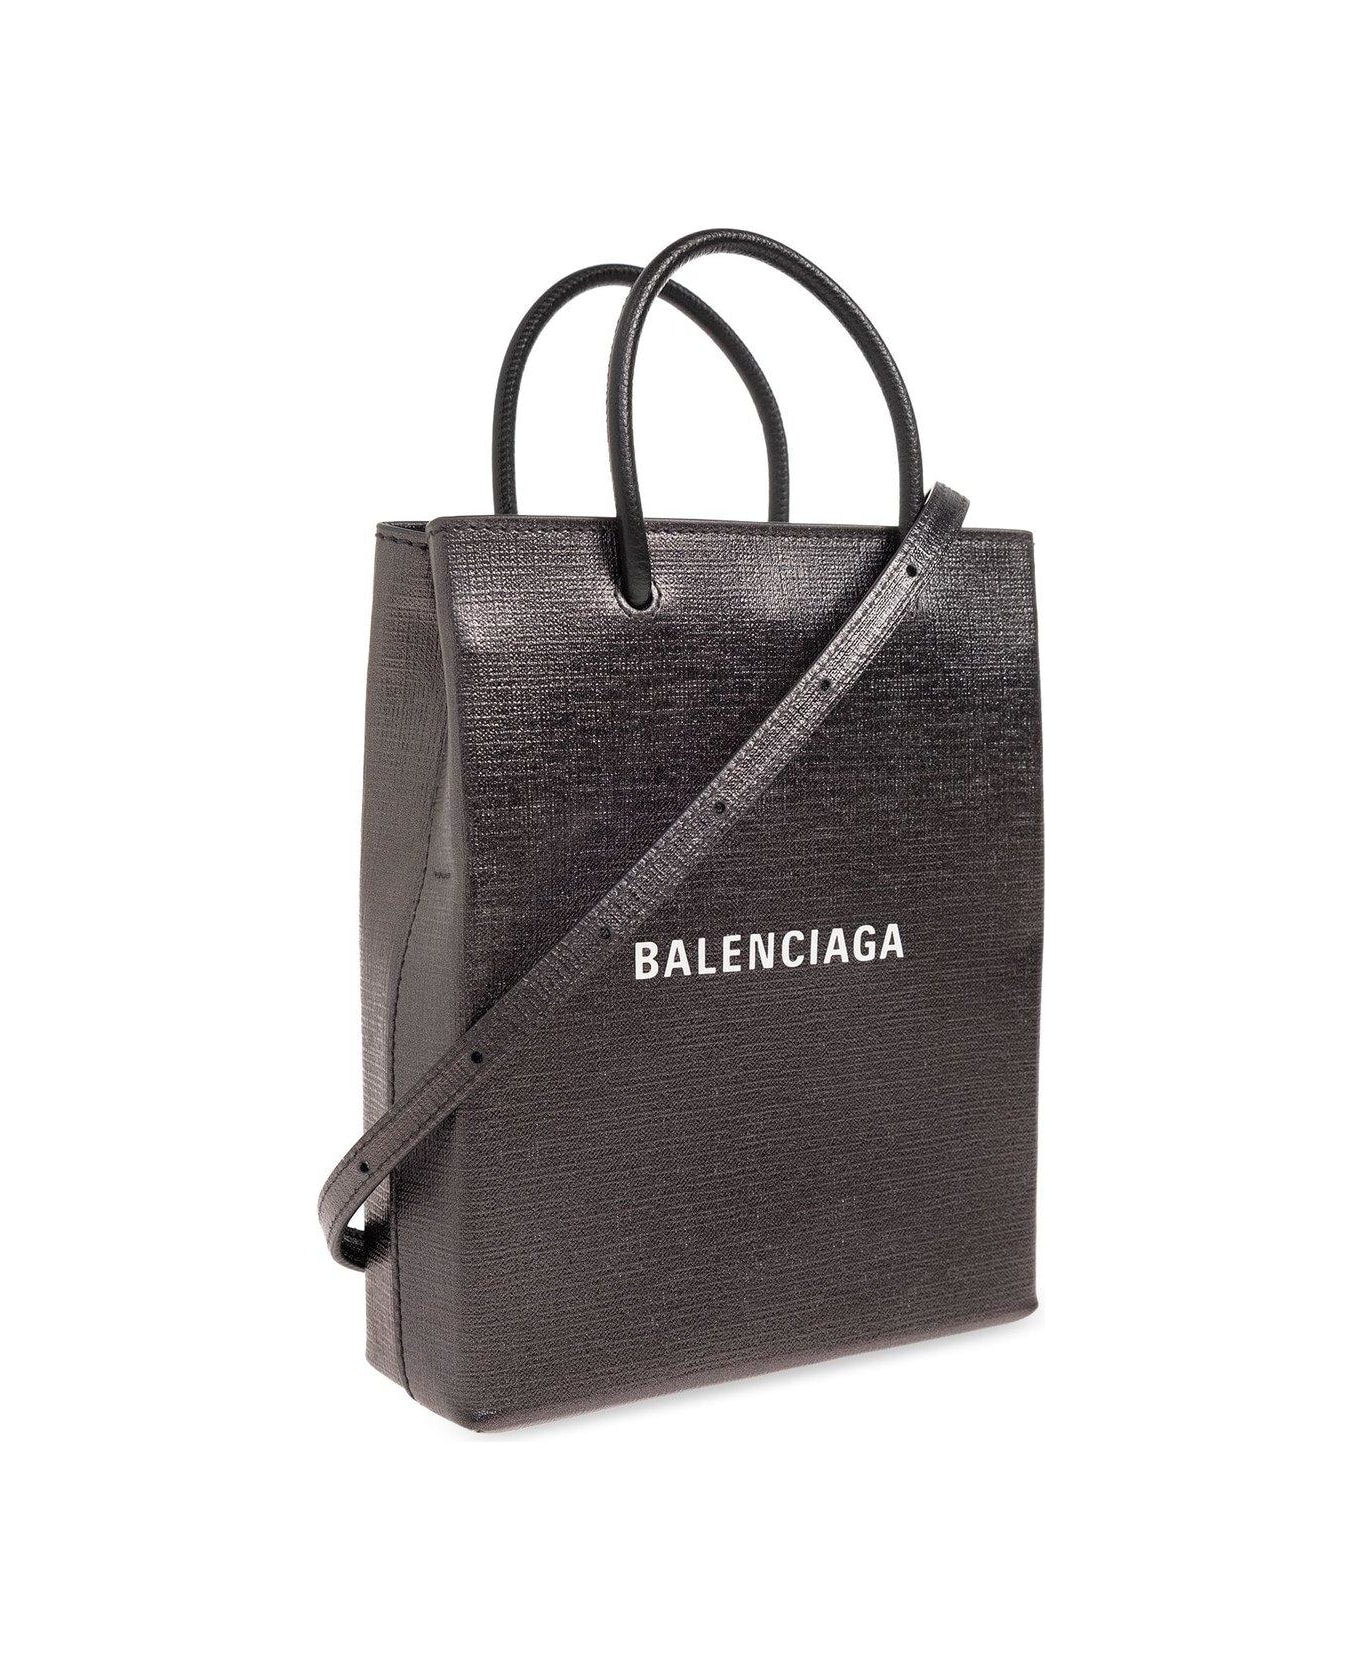 Balenciaga Metallized Large Tote Bag